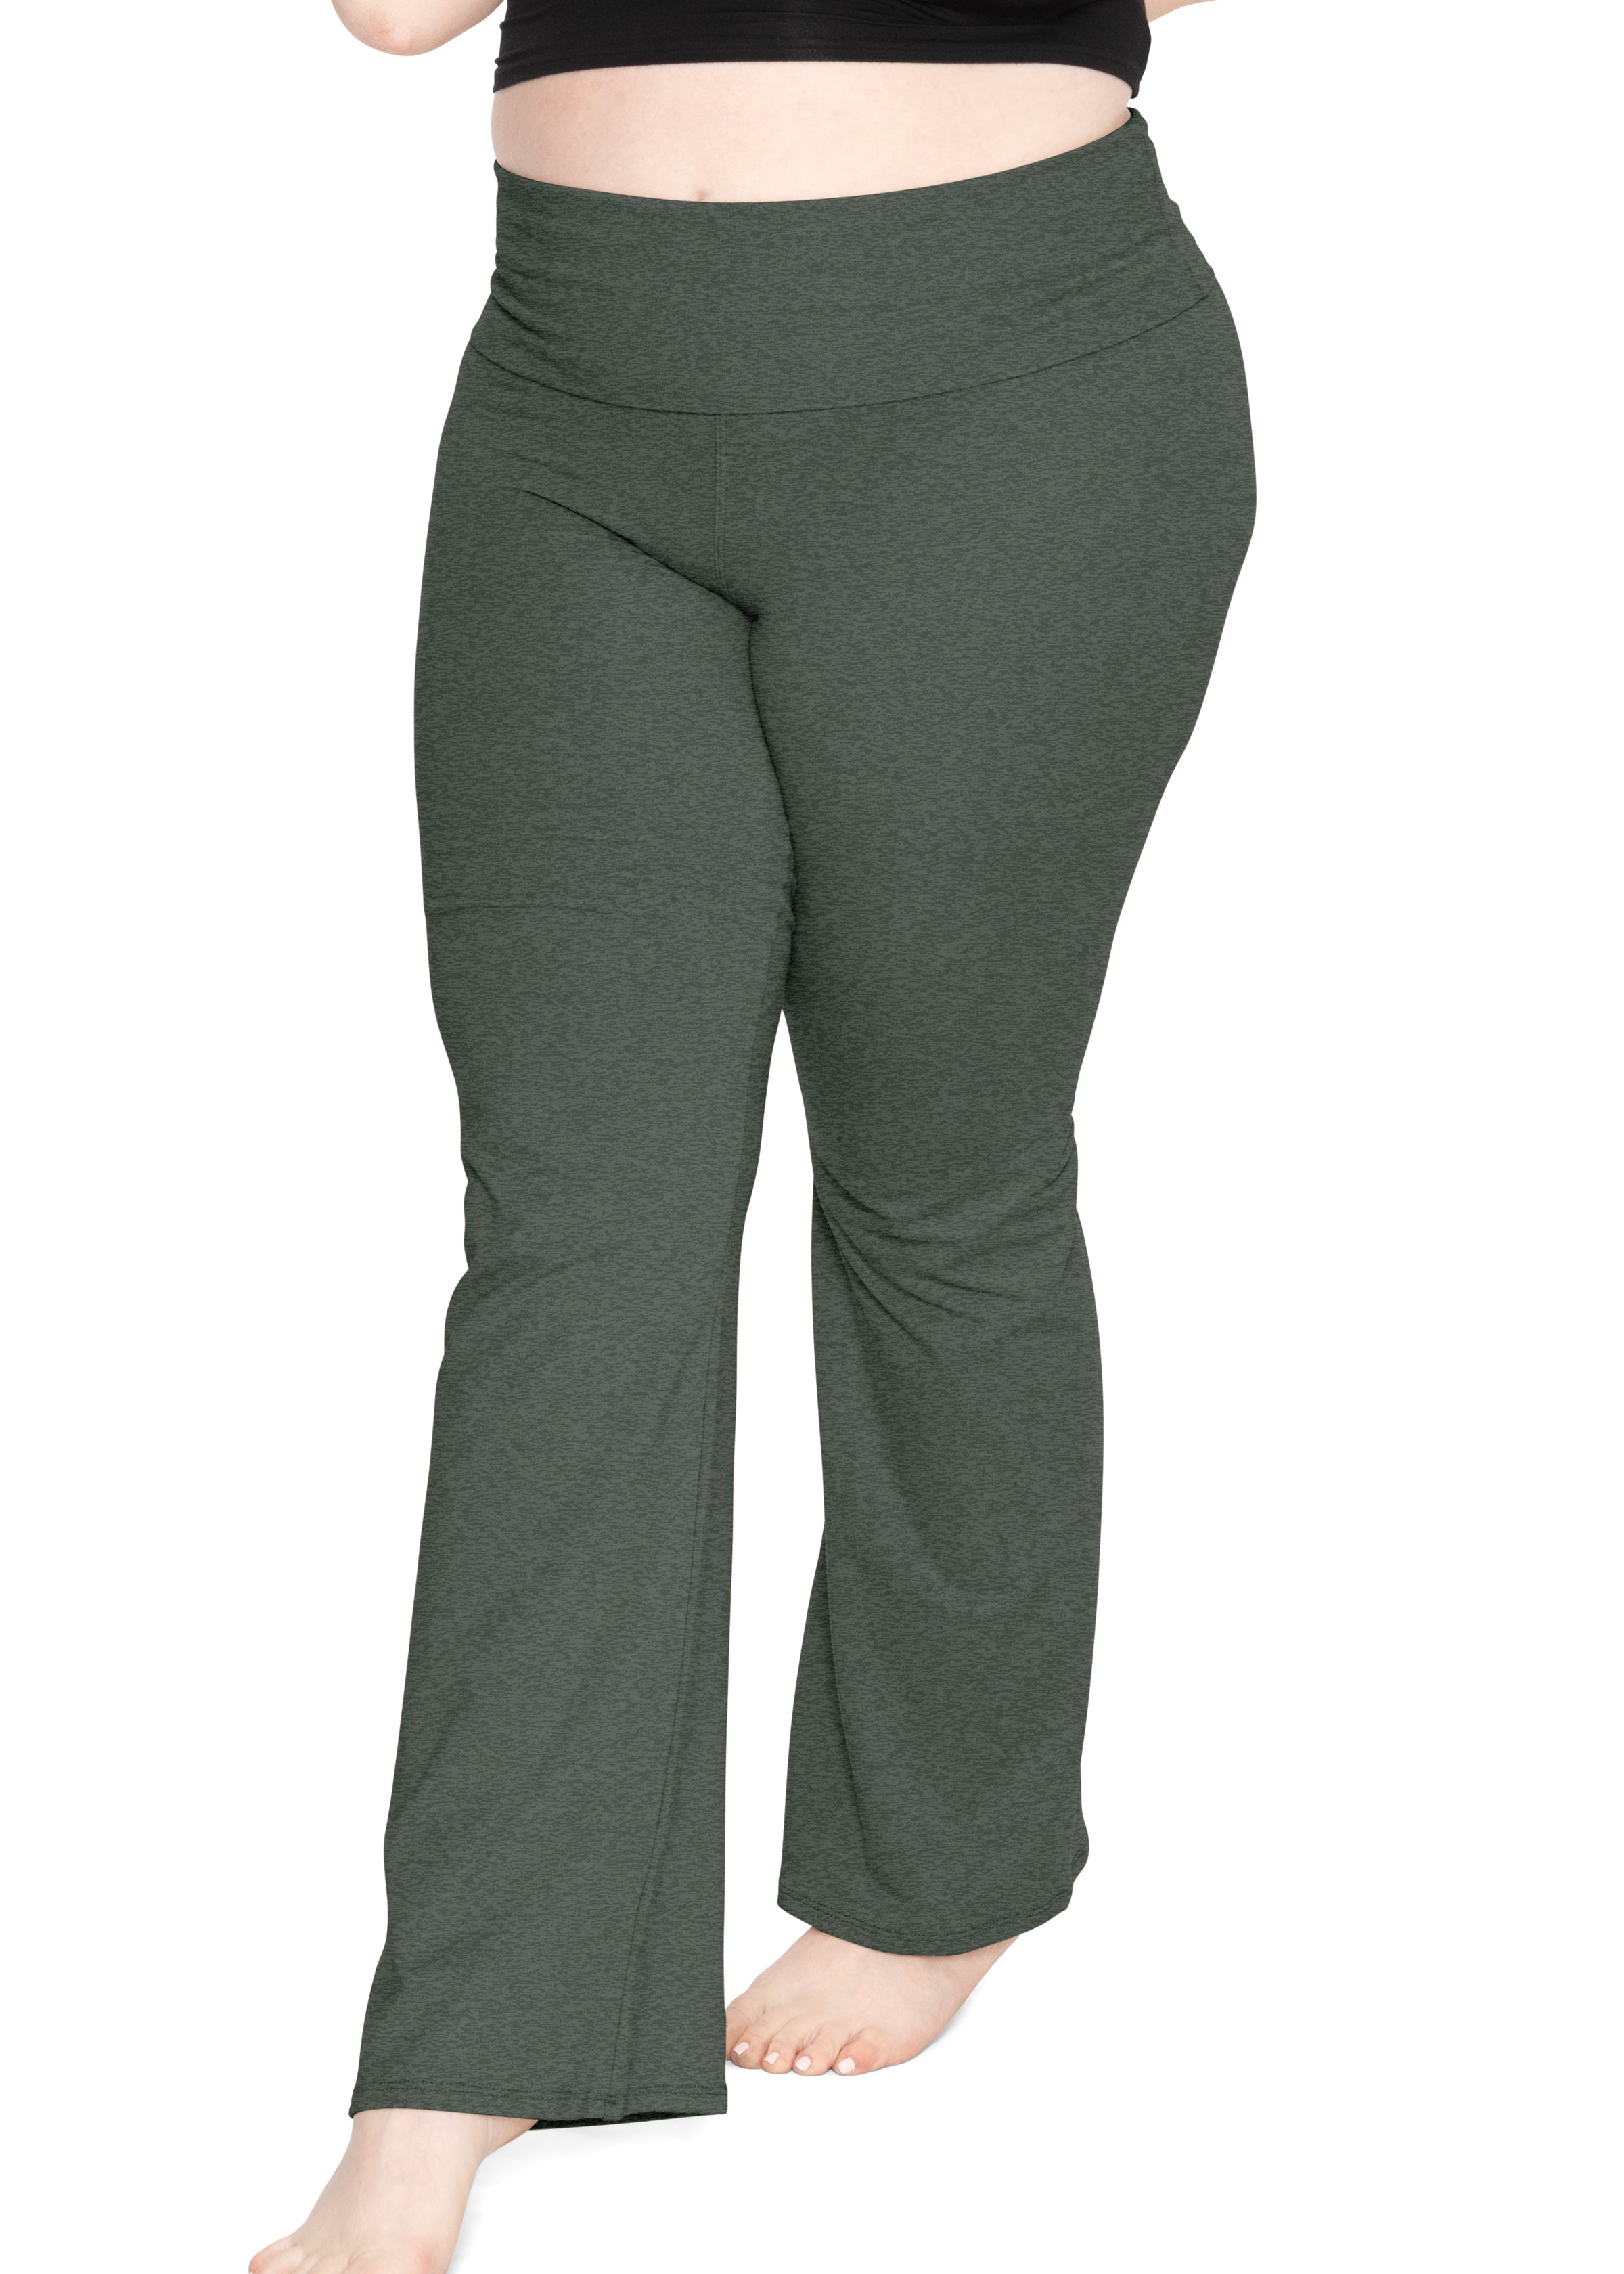 nsendm Unisex Pants Adult Cotton Yoga Pants with Pockets for Women Petite  Solid Pants Exercise Women's Color Tall Wide Leg Yoga Pants for(Black, XL)